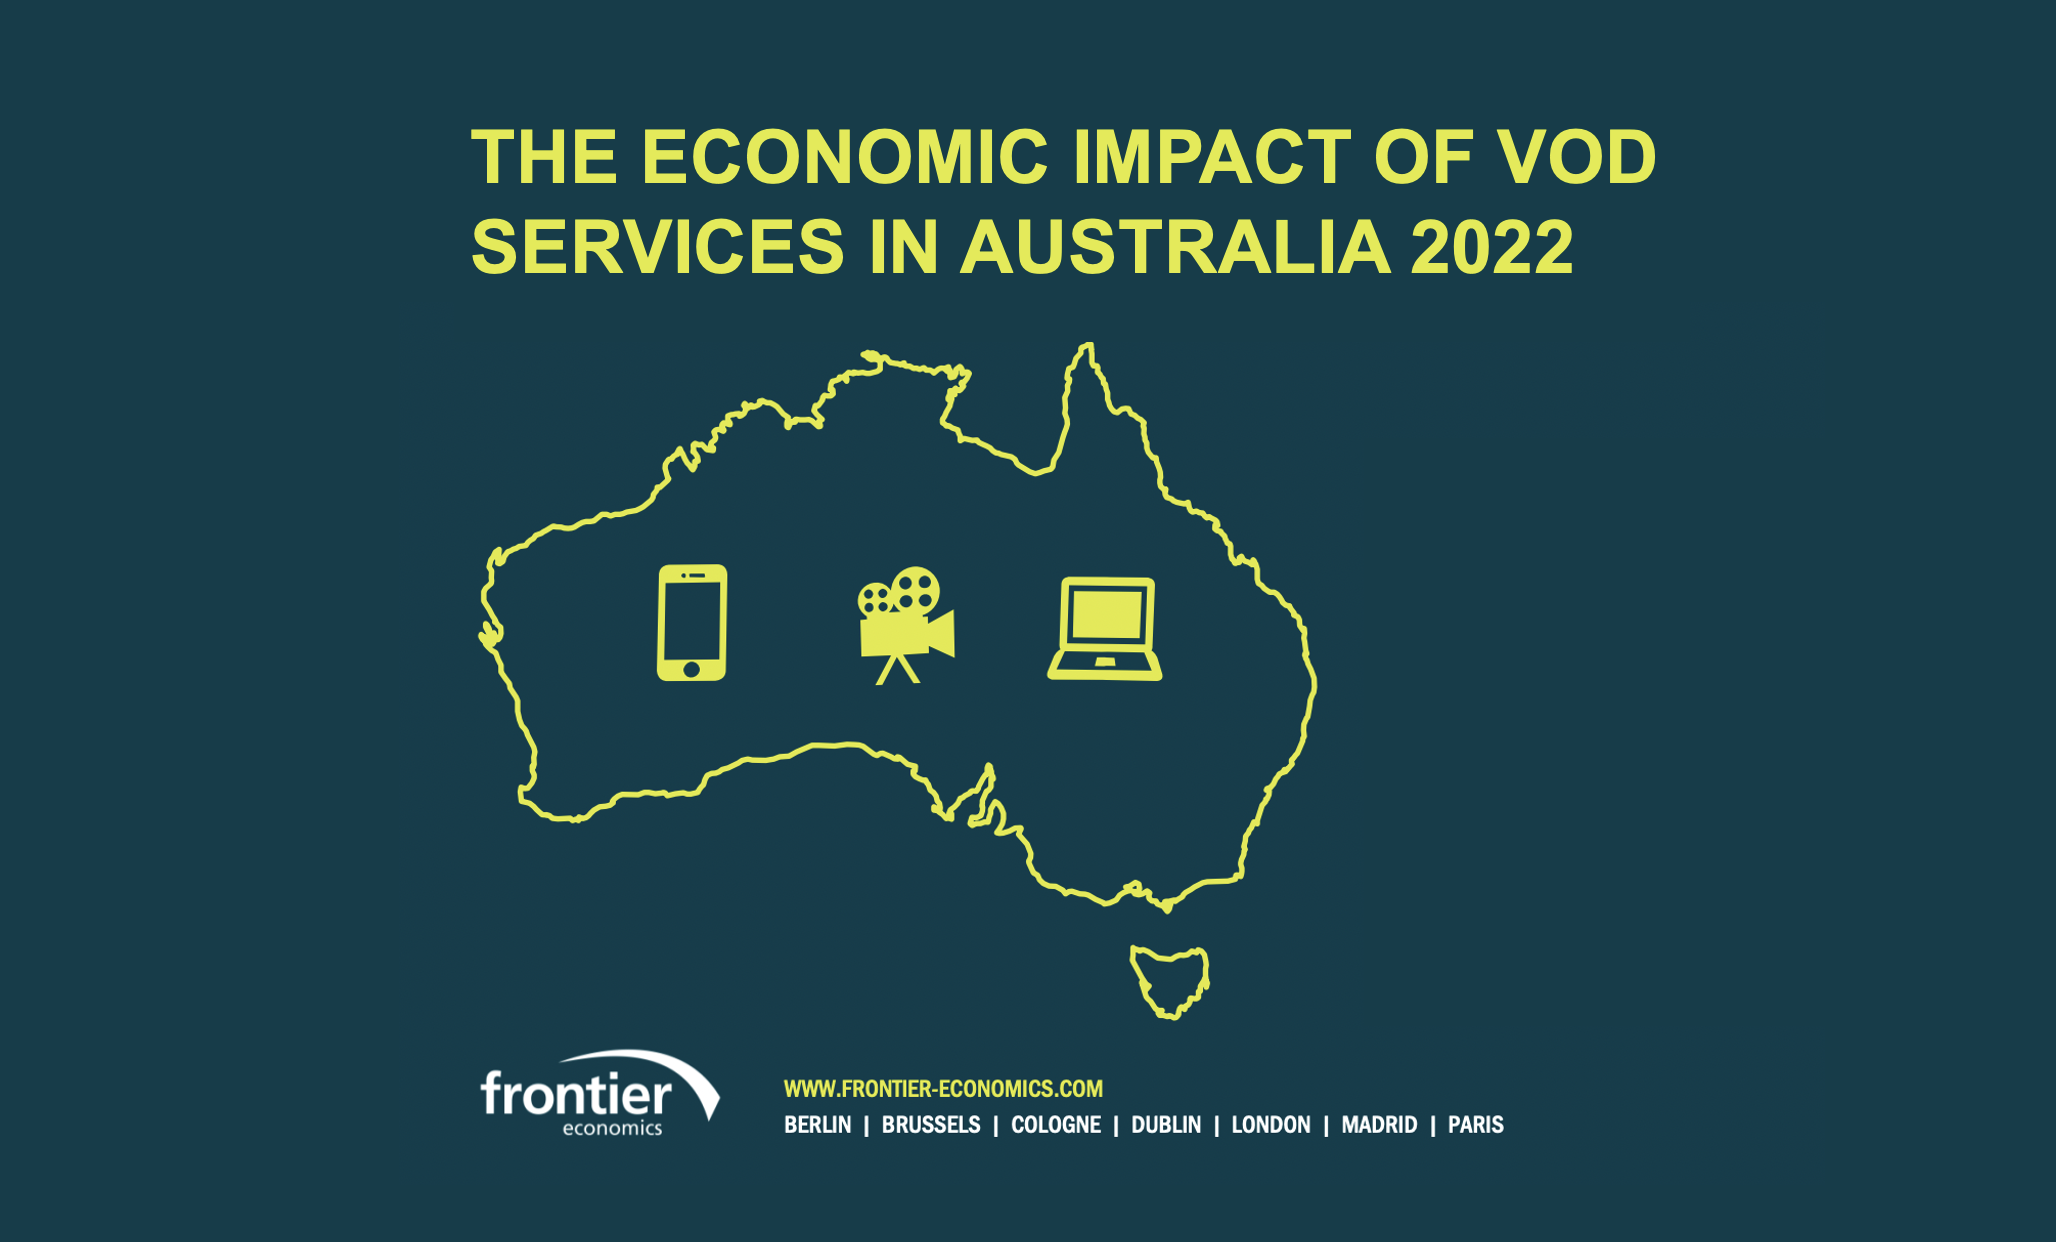 The Economic Impact of VOD Services in Australia 2022